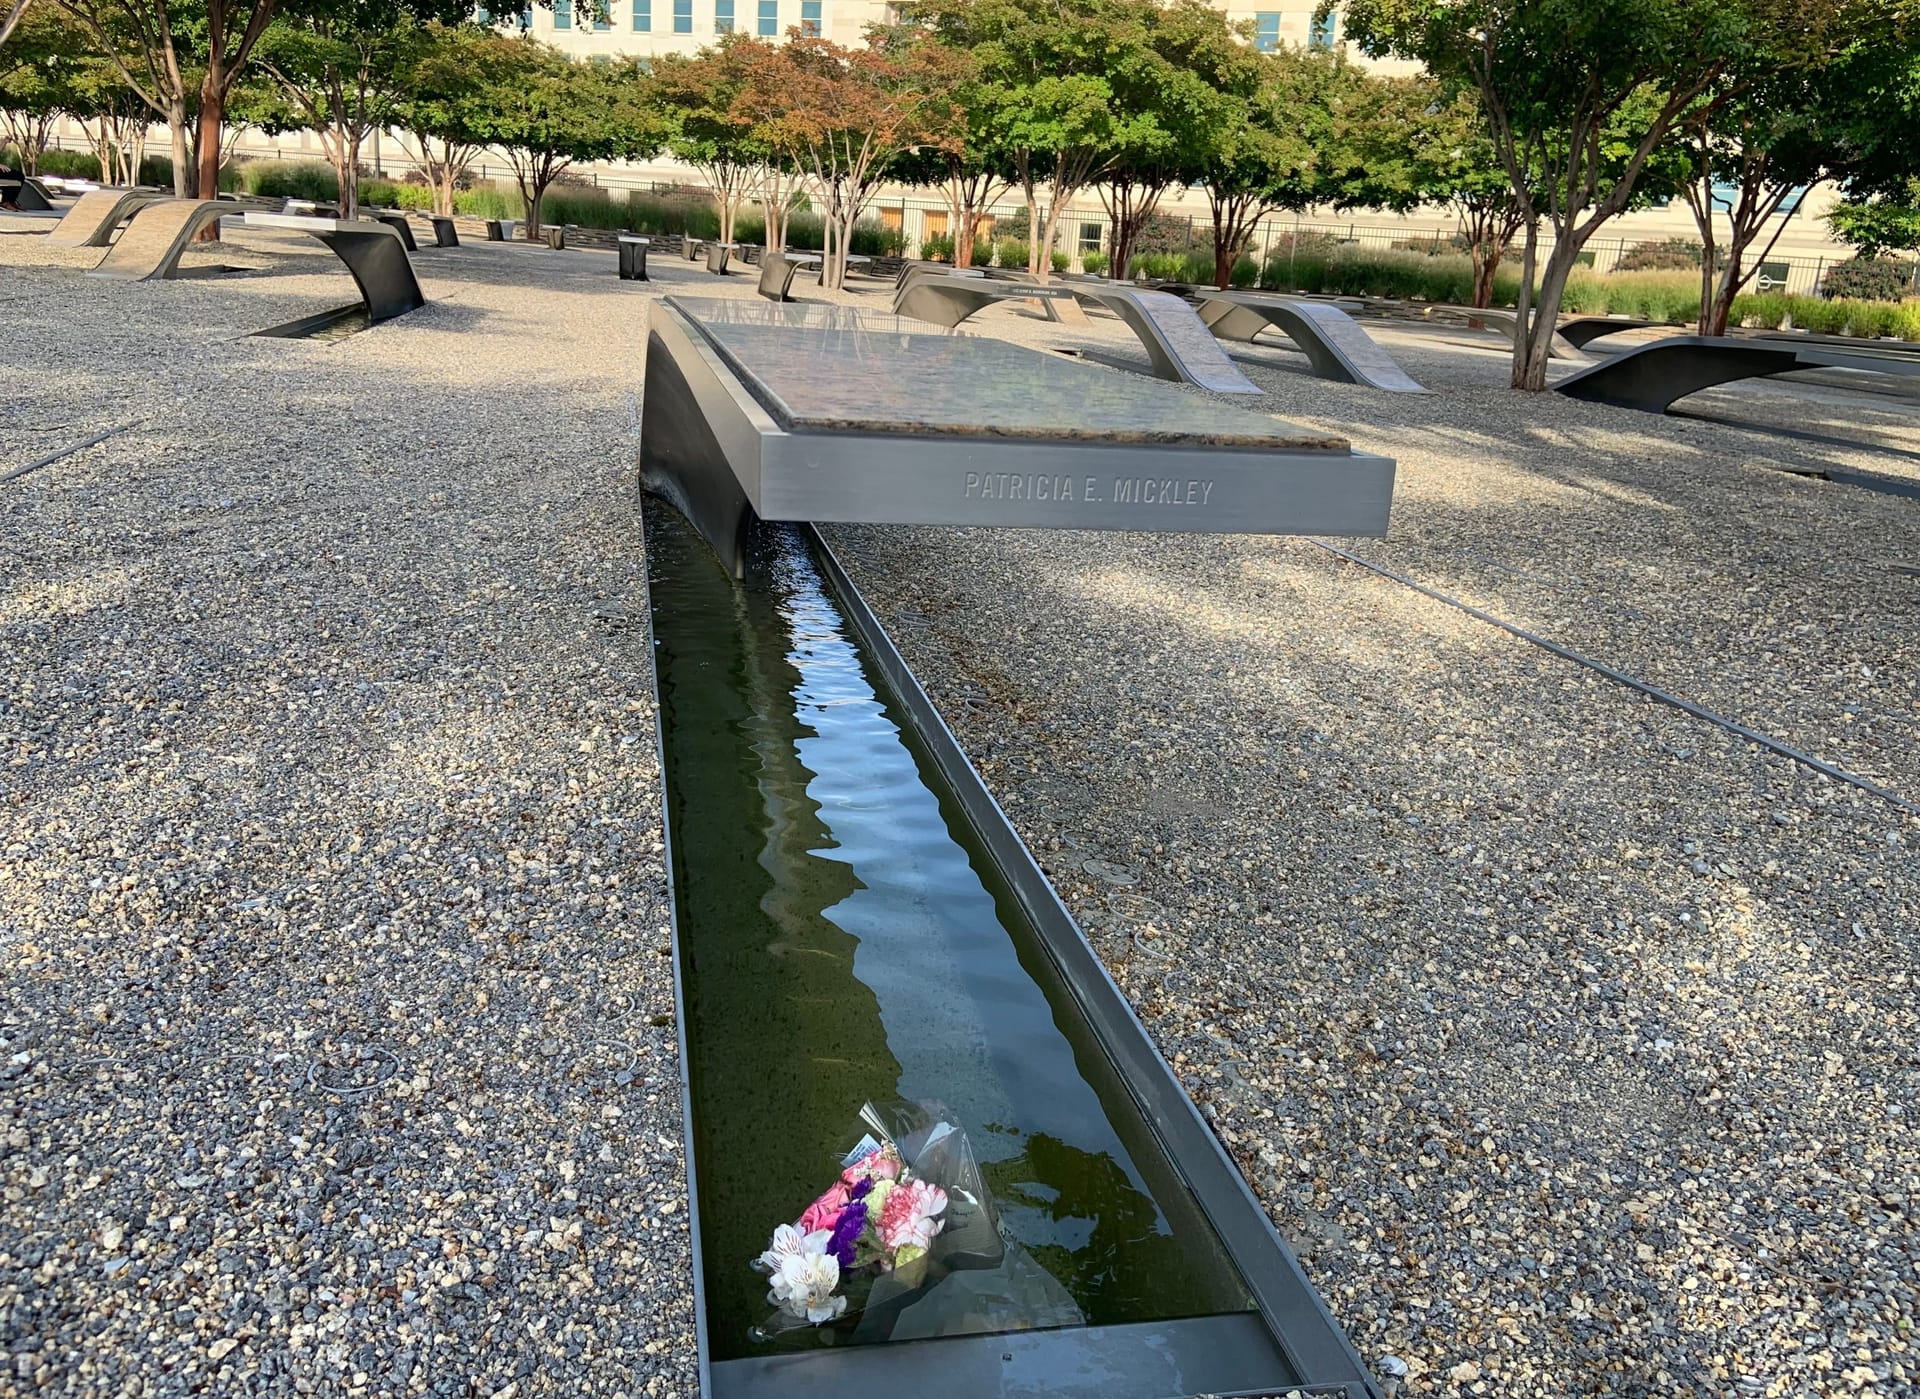 Gedenken an 189 Tote von 2001: 9/11 Memorial am Pentagon in Arlington.